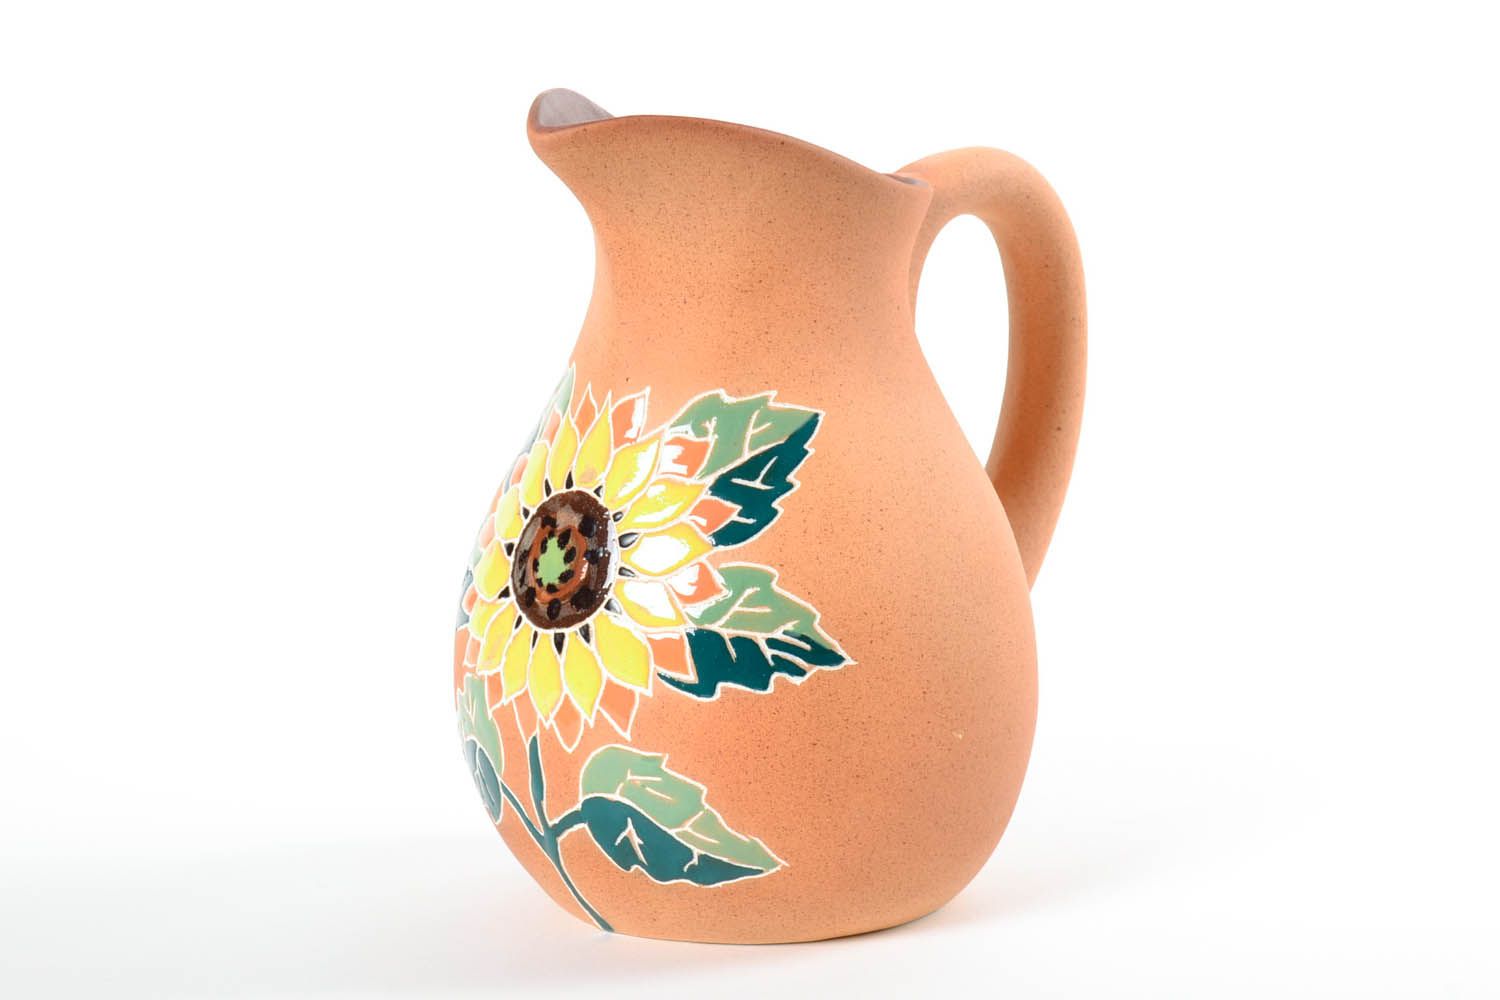 60 oz ceramic water jug pitcher for hand washing 2,45 lb photo 3